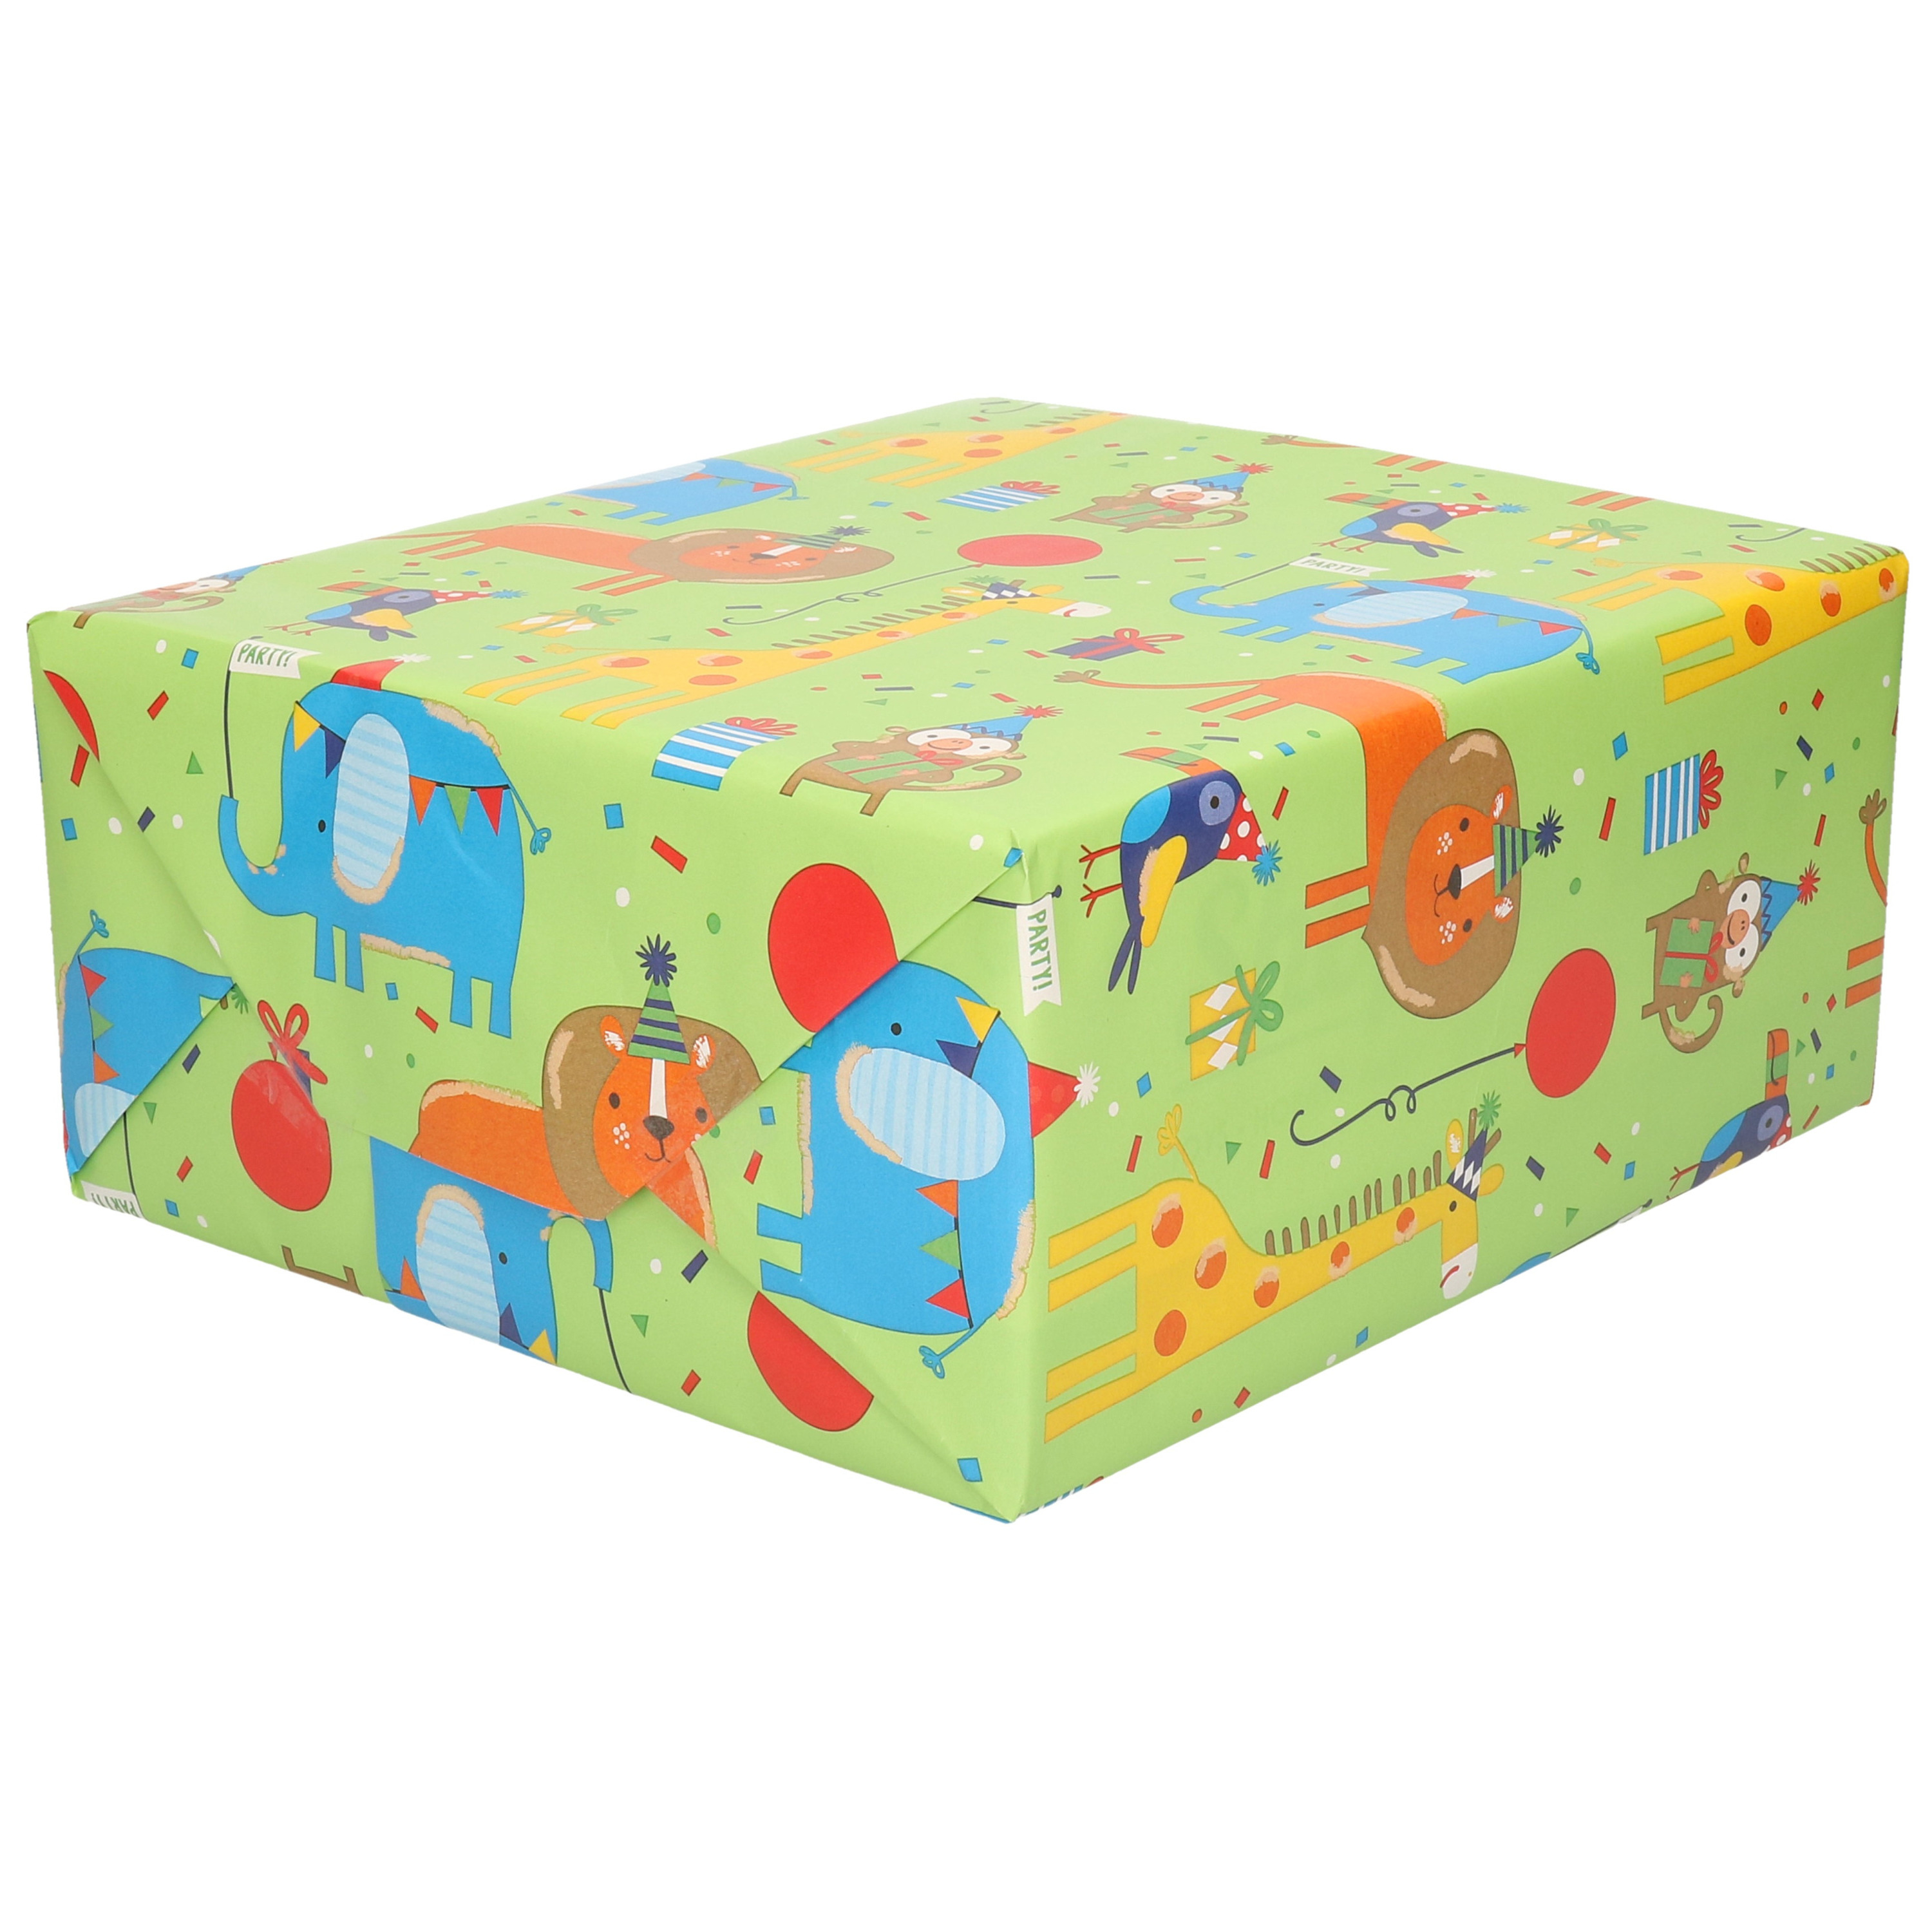 1x Rol Inpakpapier/cadeaupapier groen met dieren design 200 x 70 cm